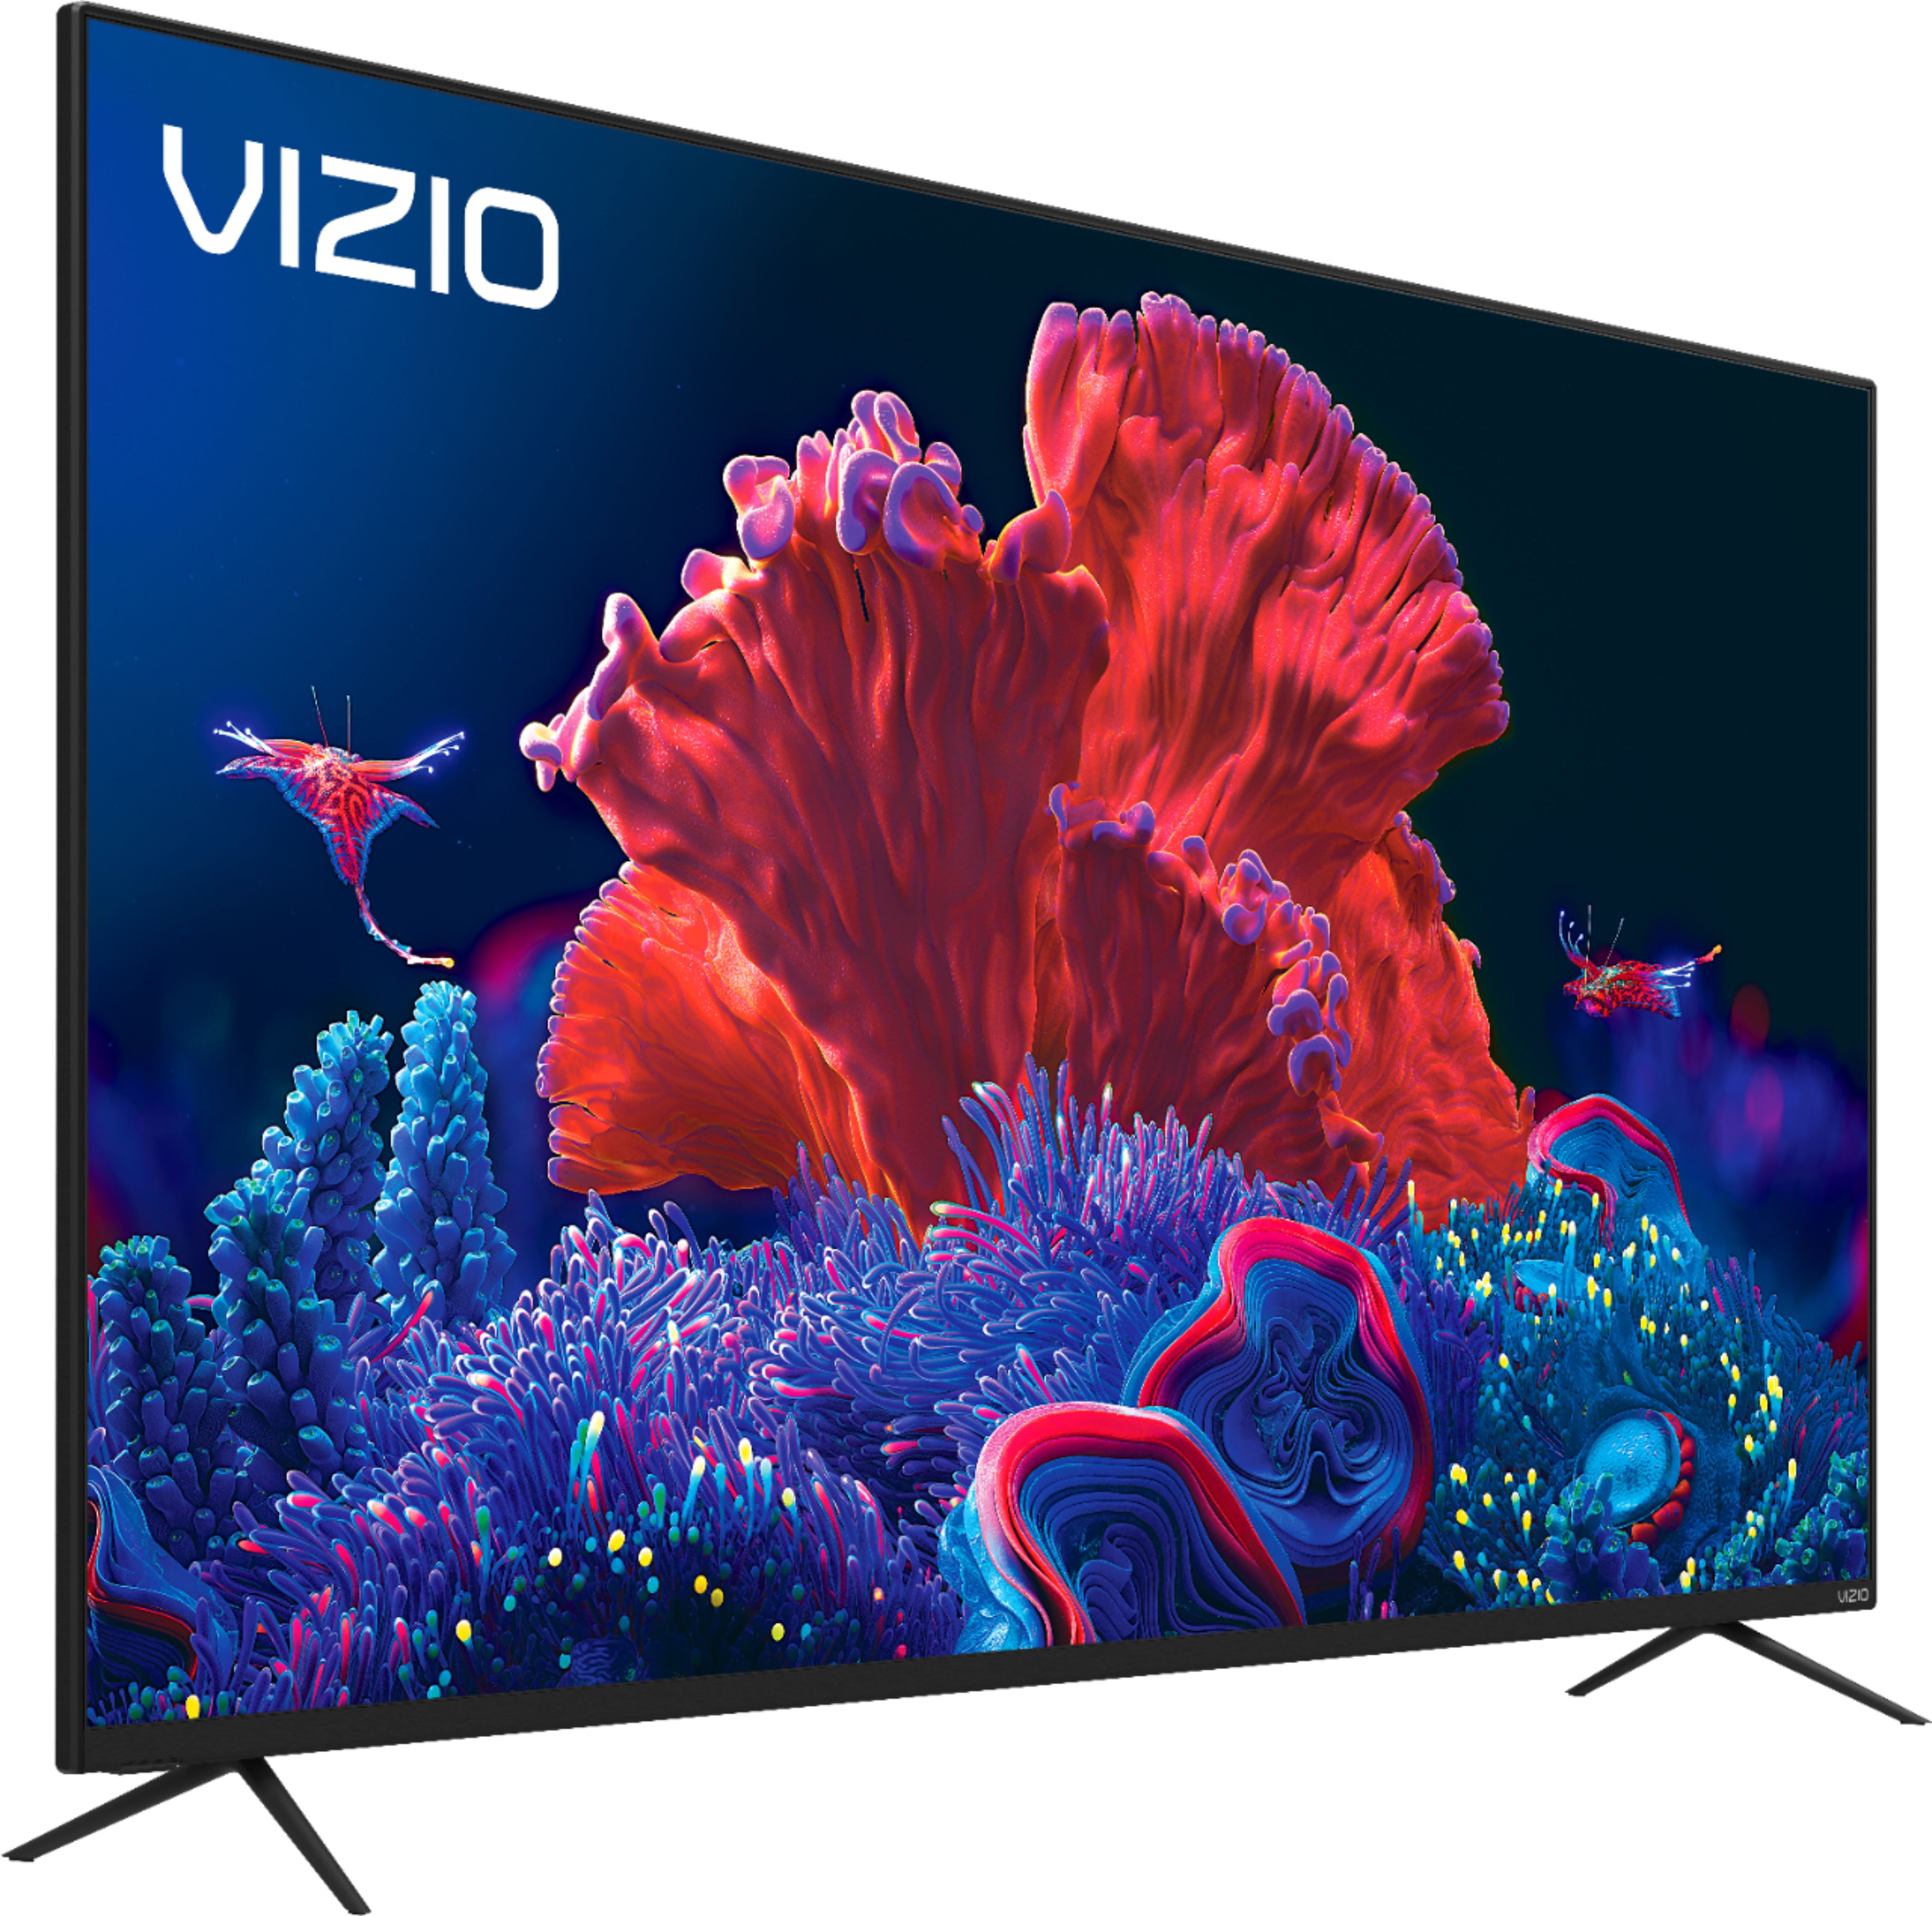 Angle View: VIZIO - 50" Class M-Series Quantum Series LED 4K UHD SmartCast TV